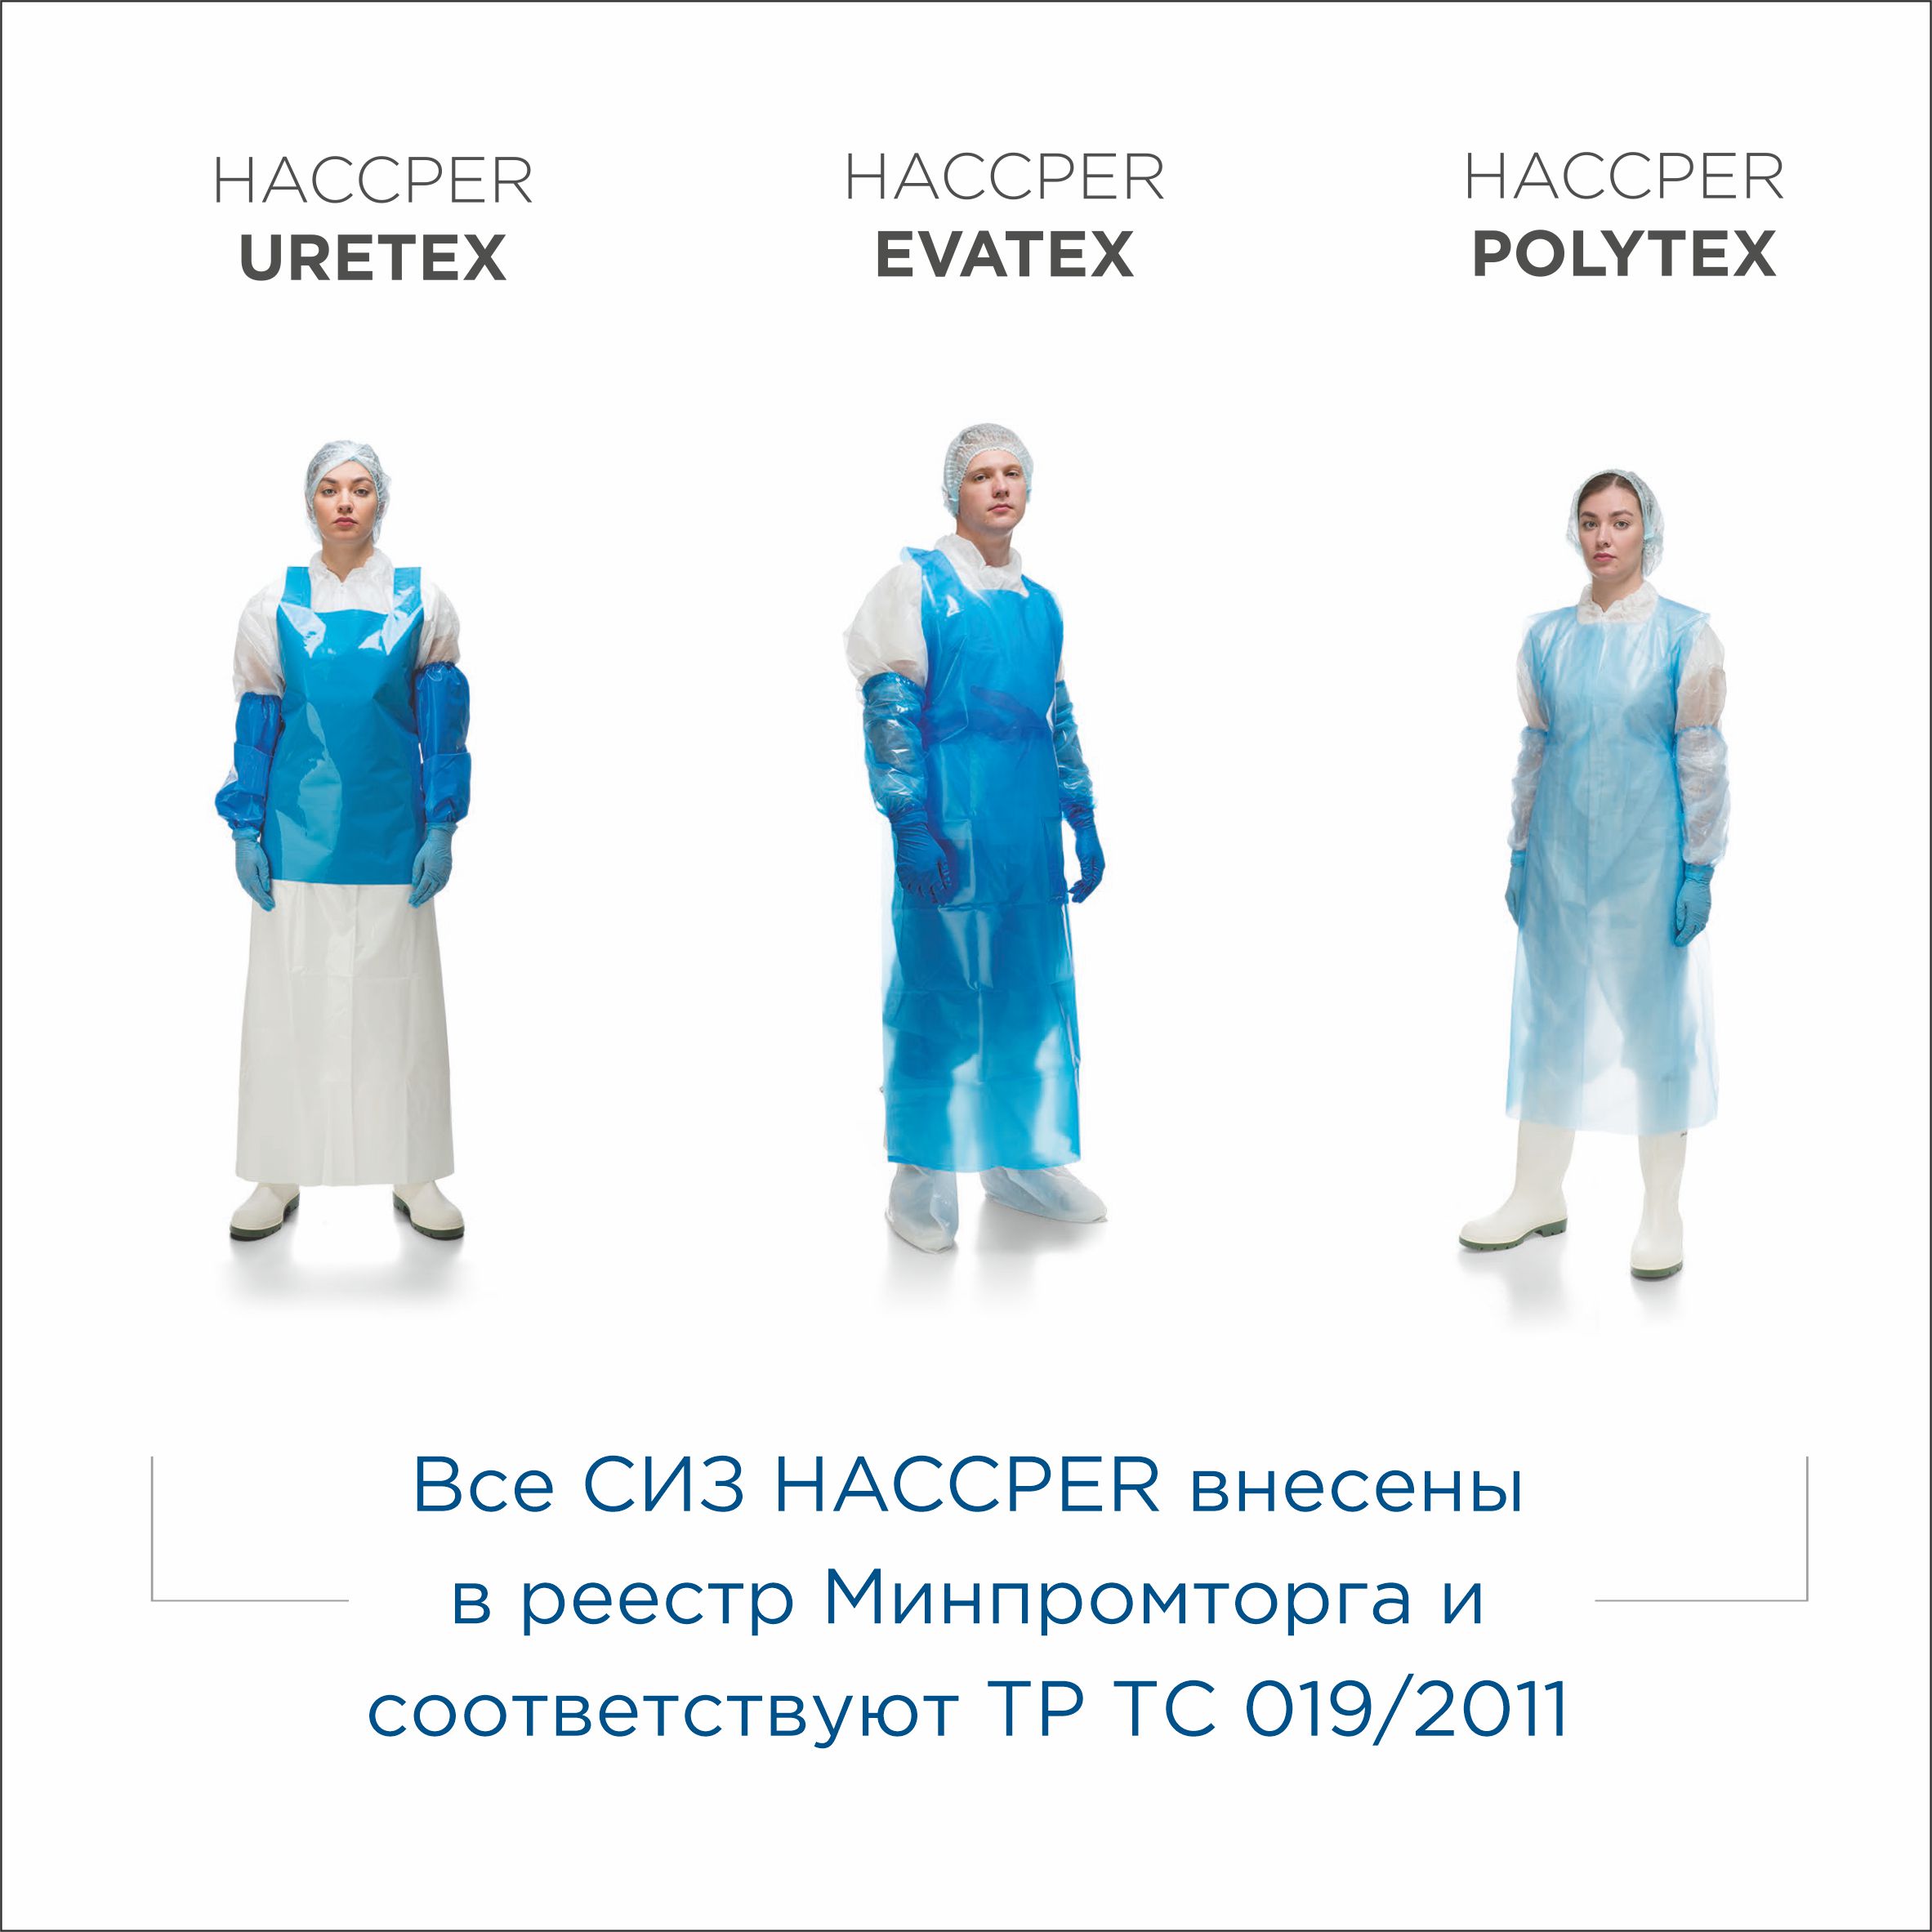 Фартук HACCPER Evatex с рукавами, размер L, 1300х950 мм